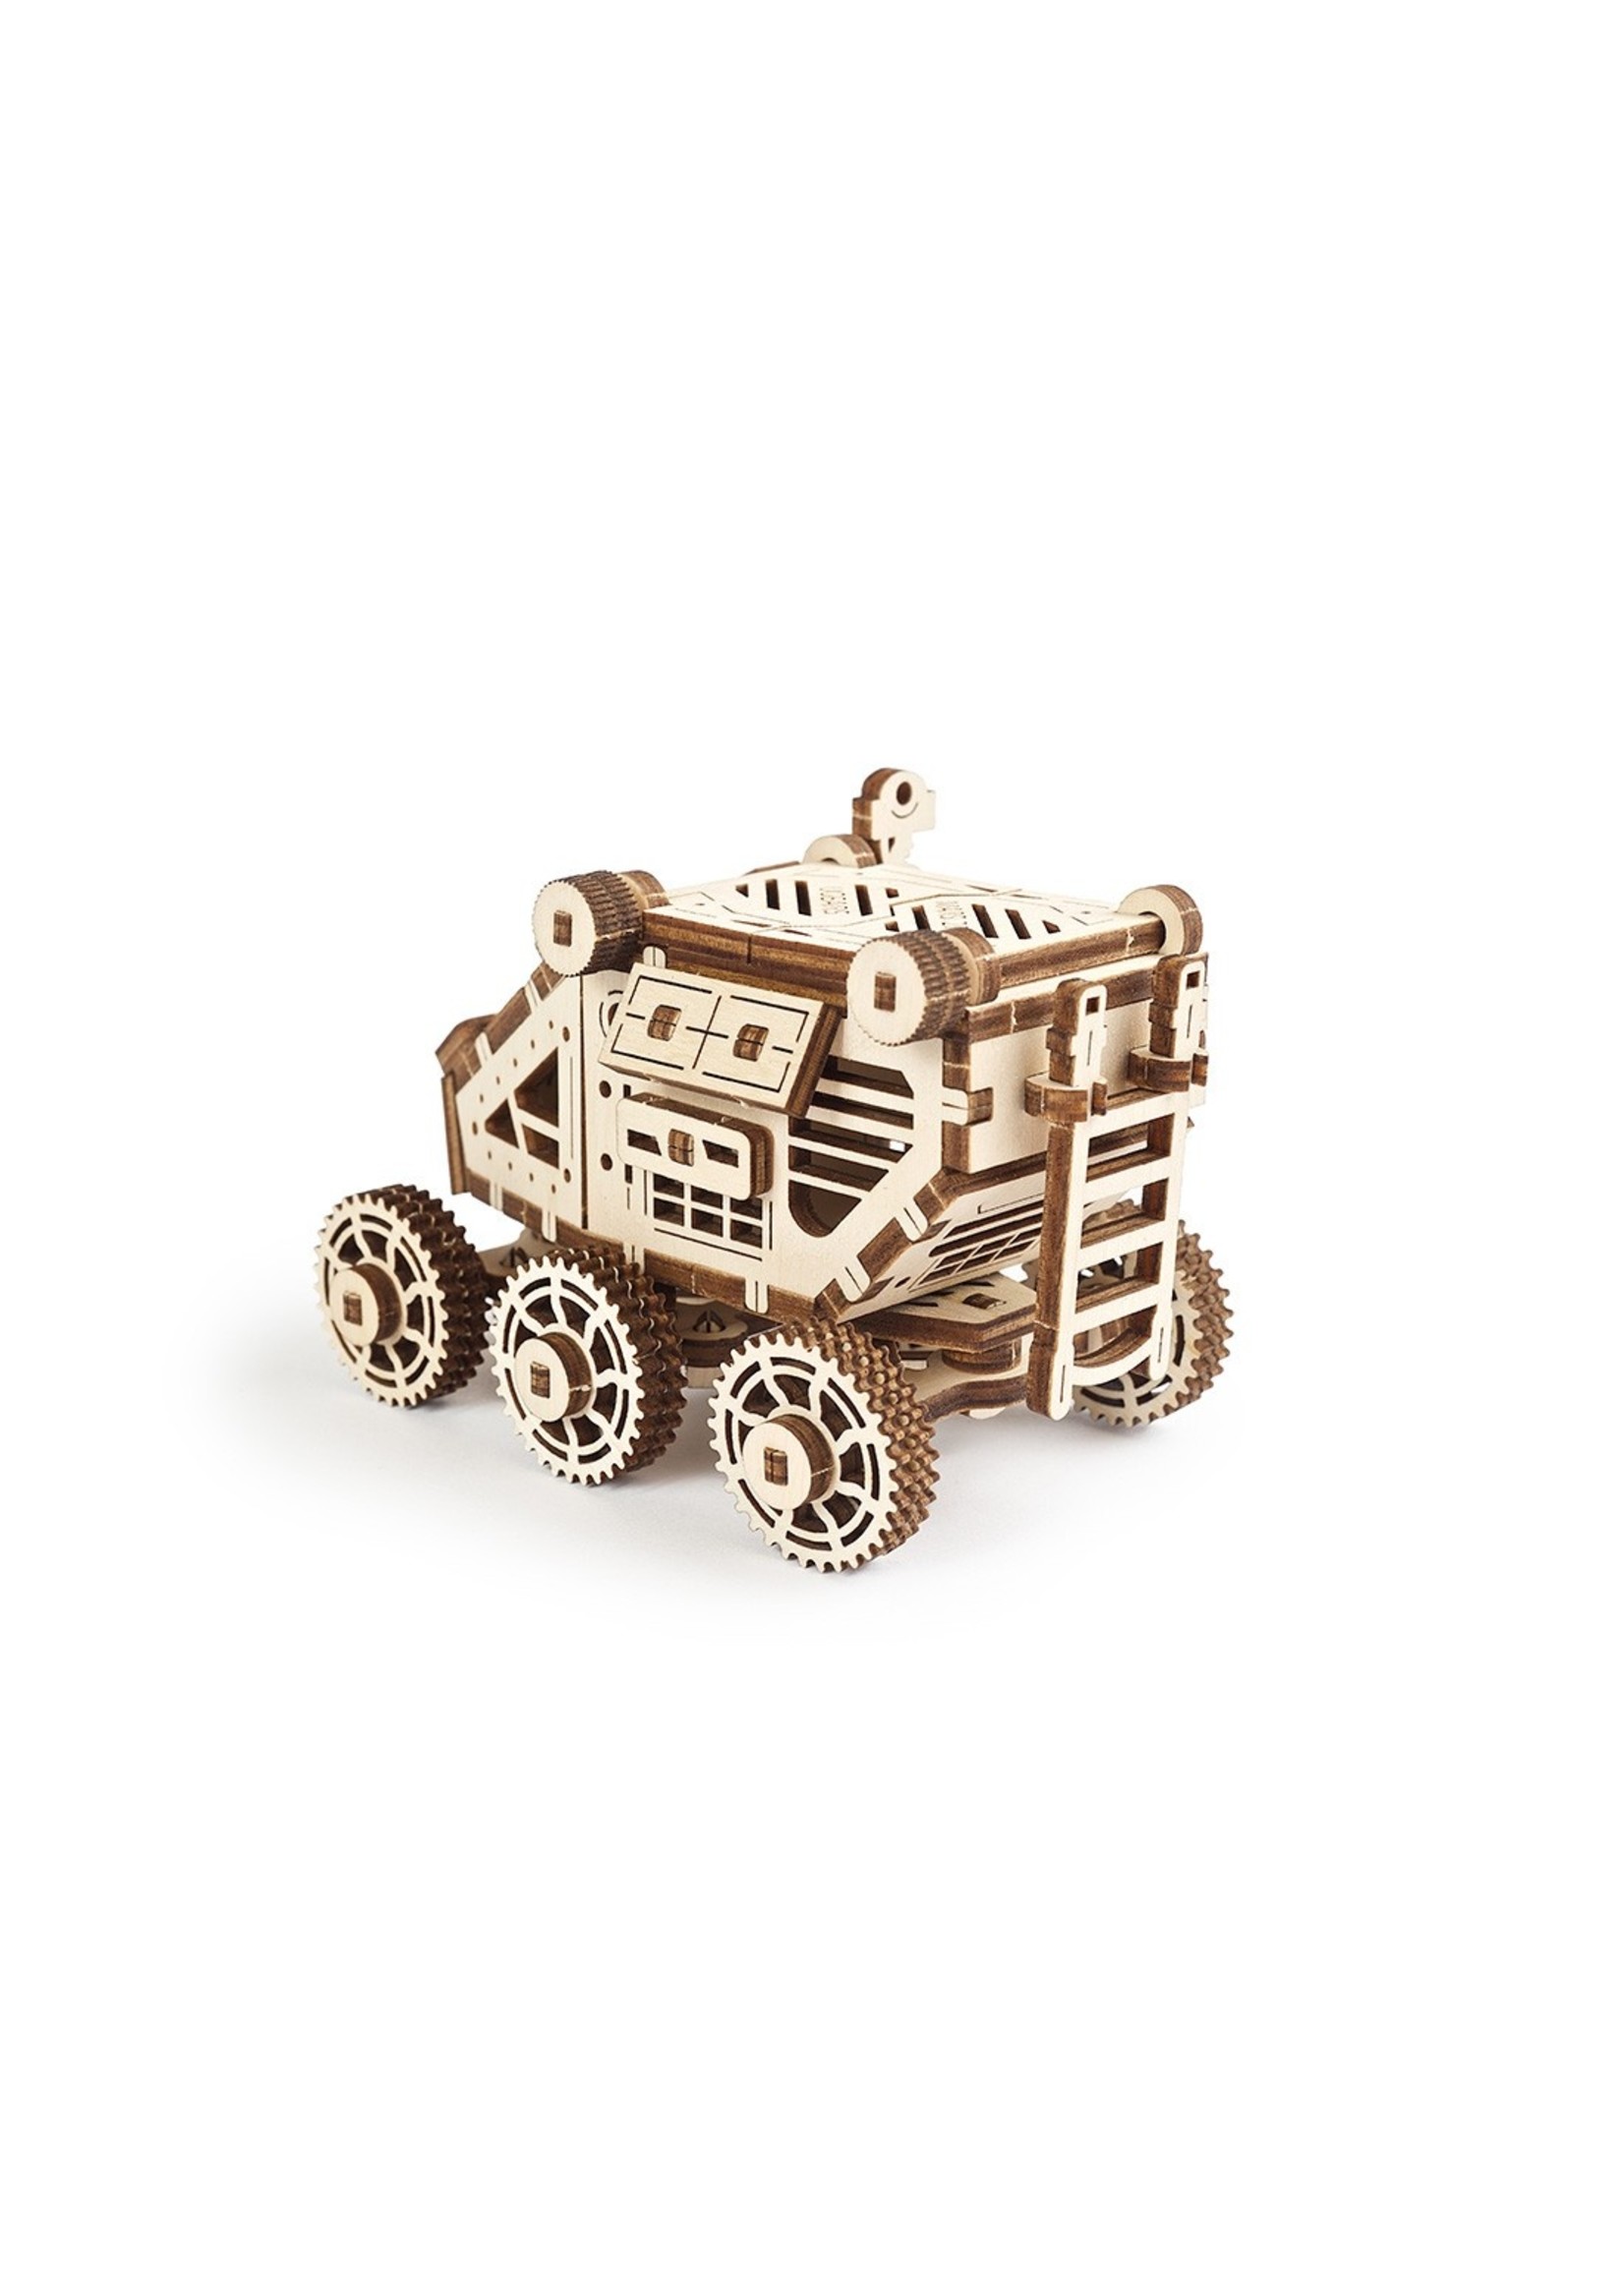 UGears - Mars Buggy Wooden Mechanical Model Kit - Hub Hobby